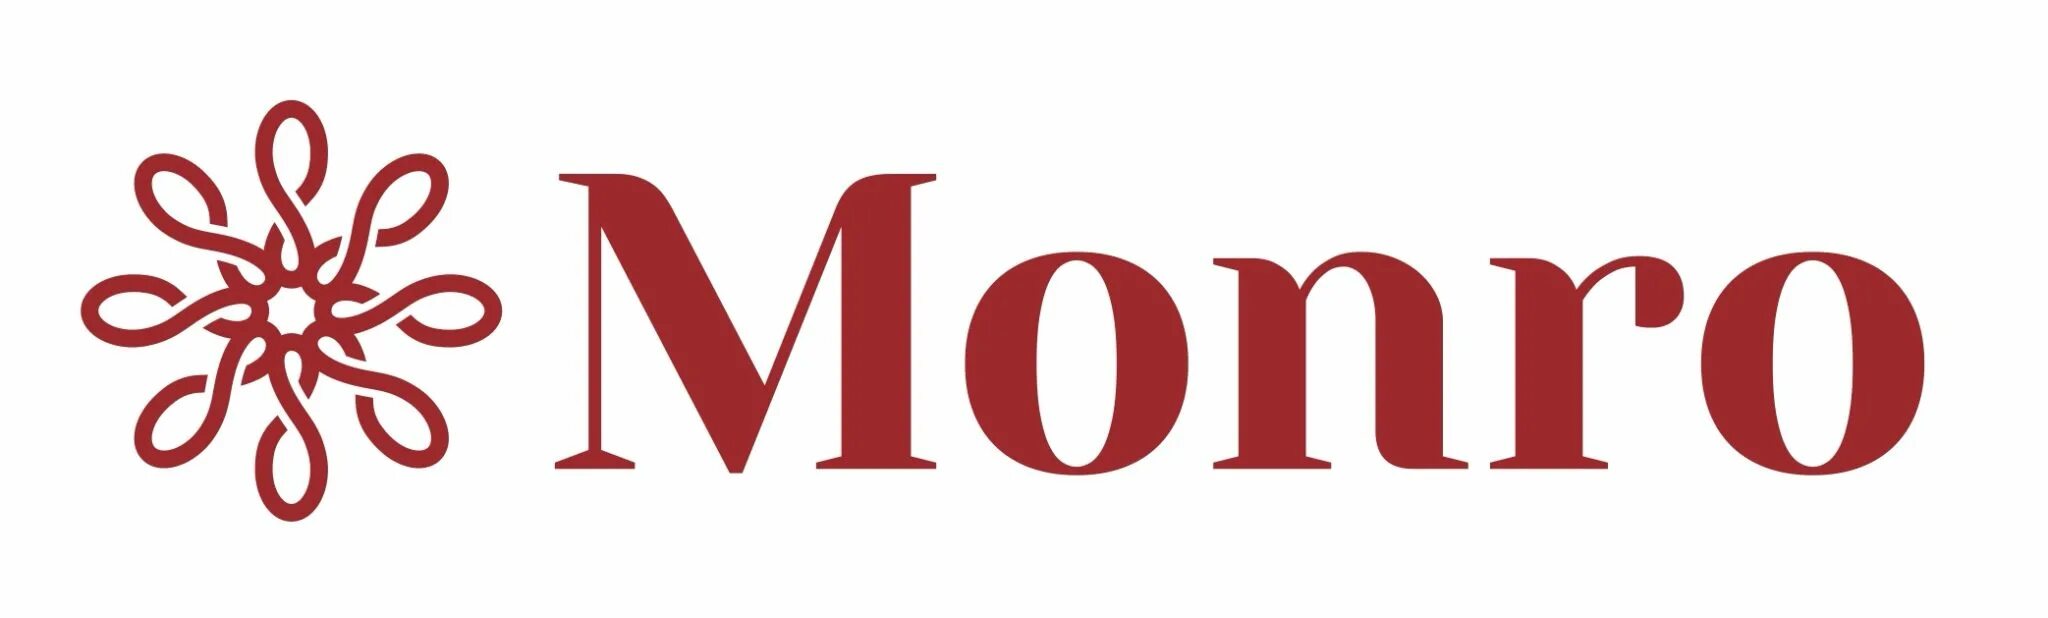 Монро логотип. Monro обувь логотип. Монро магазин логотипы. Логотип обувного магазина. Monro com